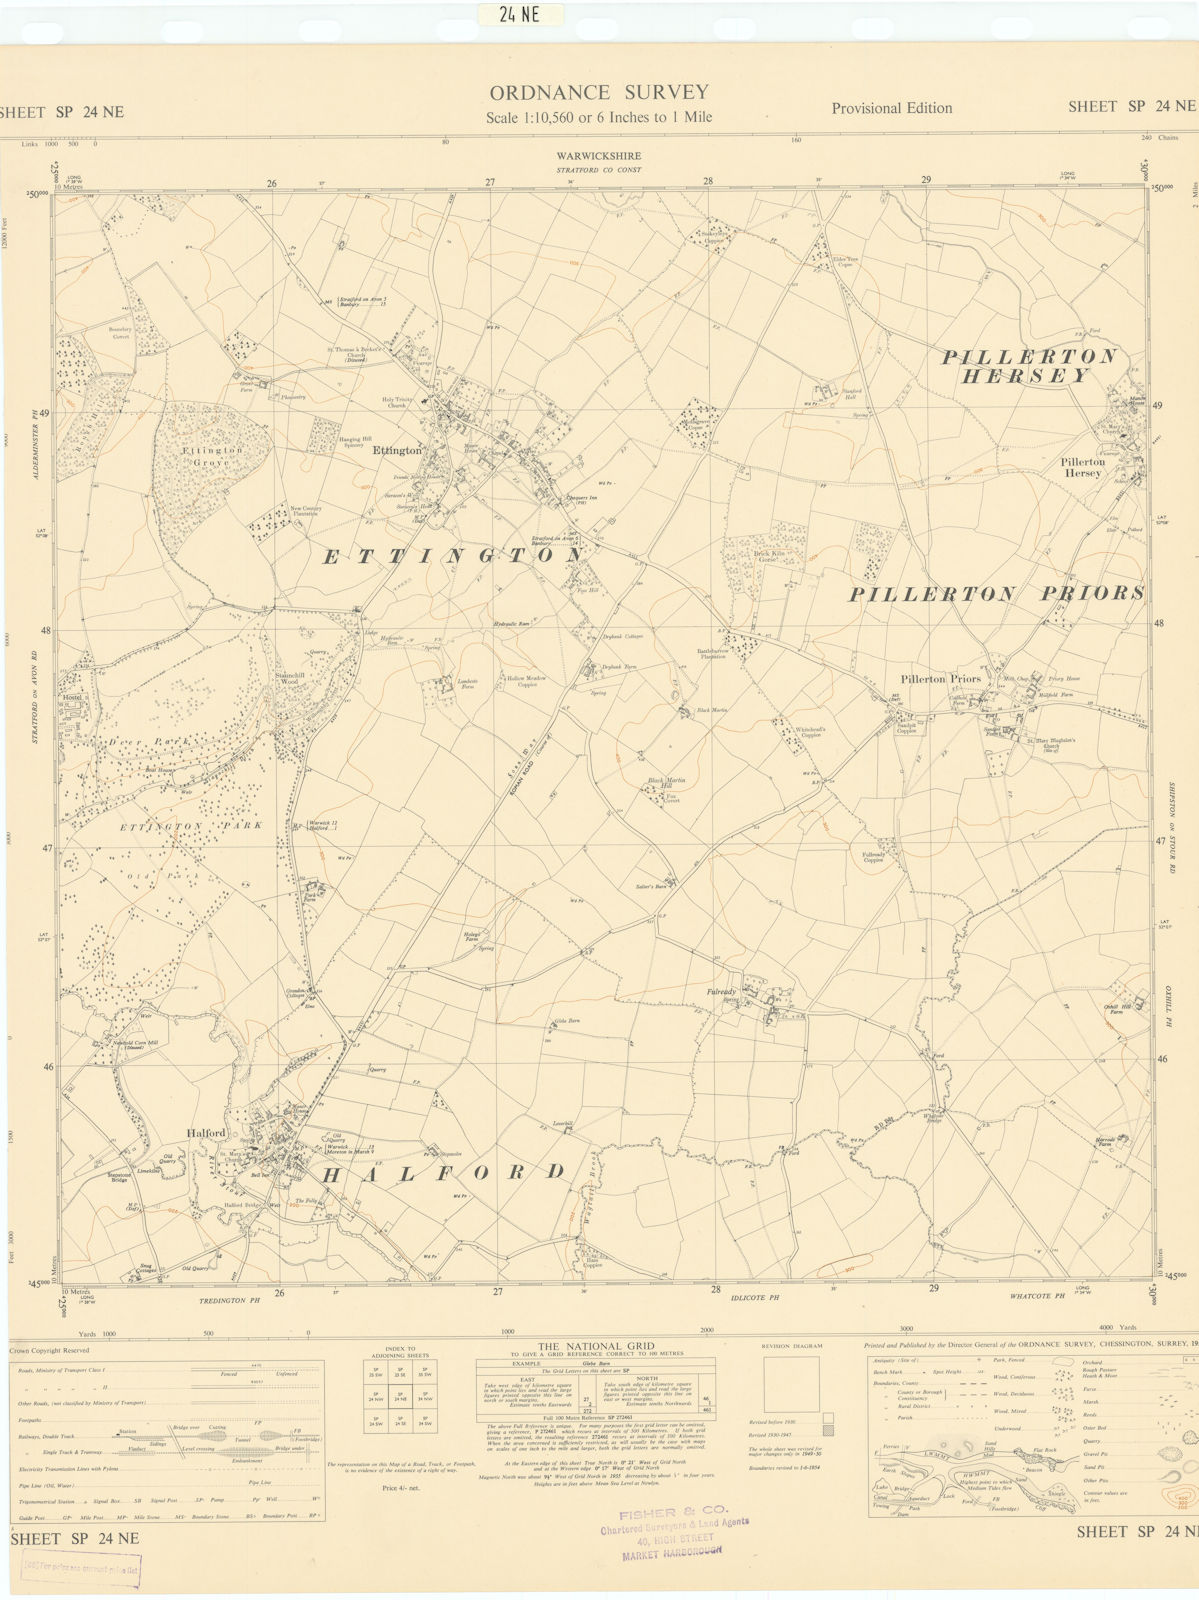 Ordnance Survey SP24NE Warks Halford Ettington Pillerton Hersey/Priors 1955 map